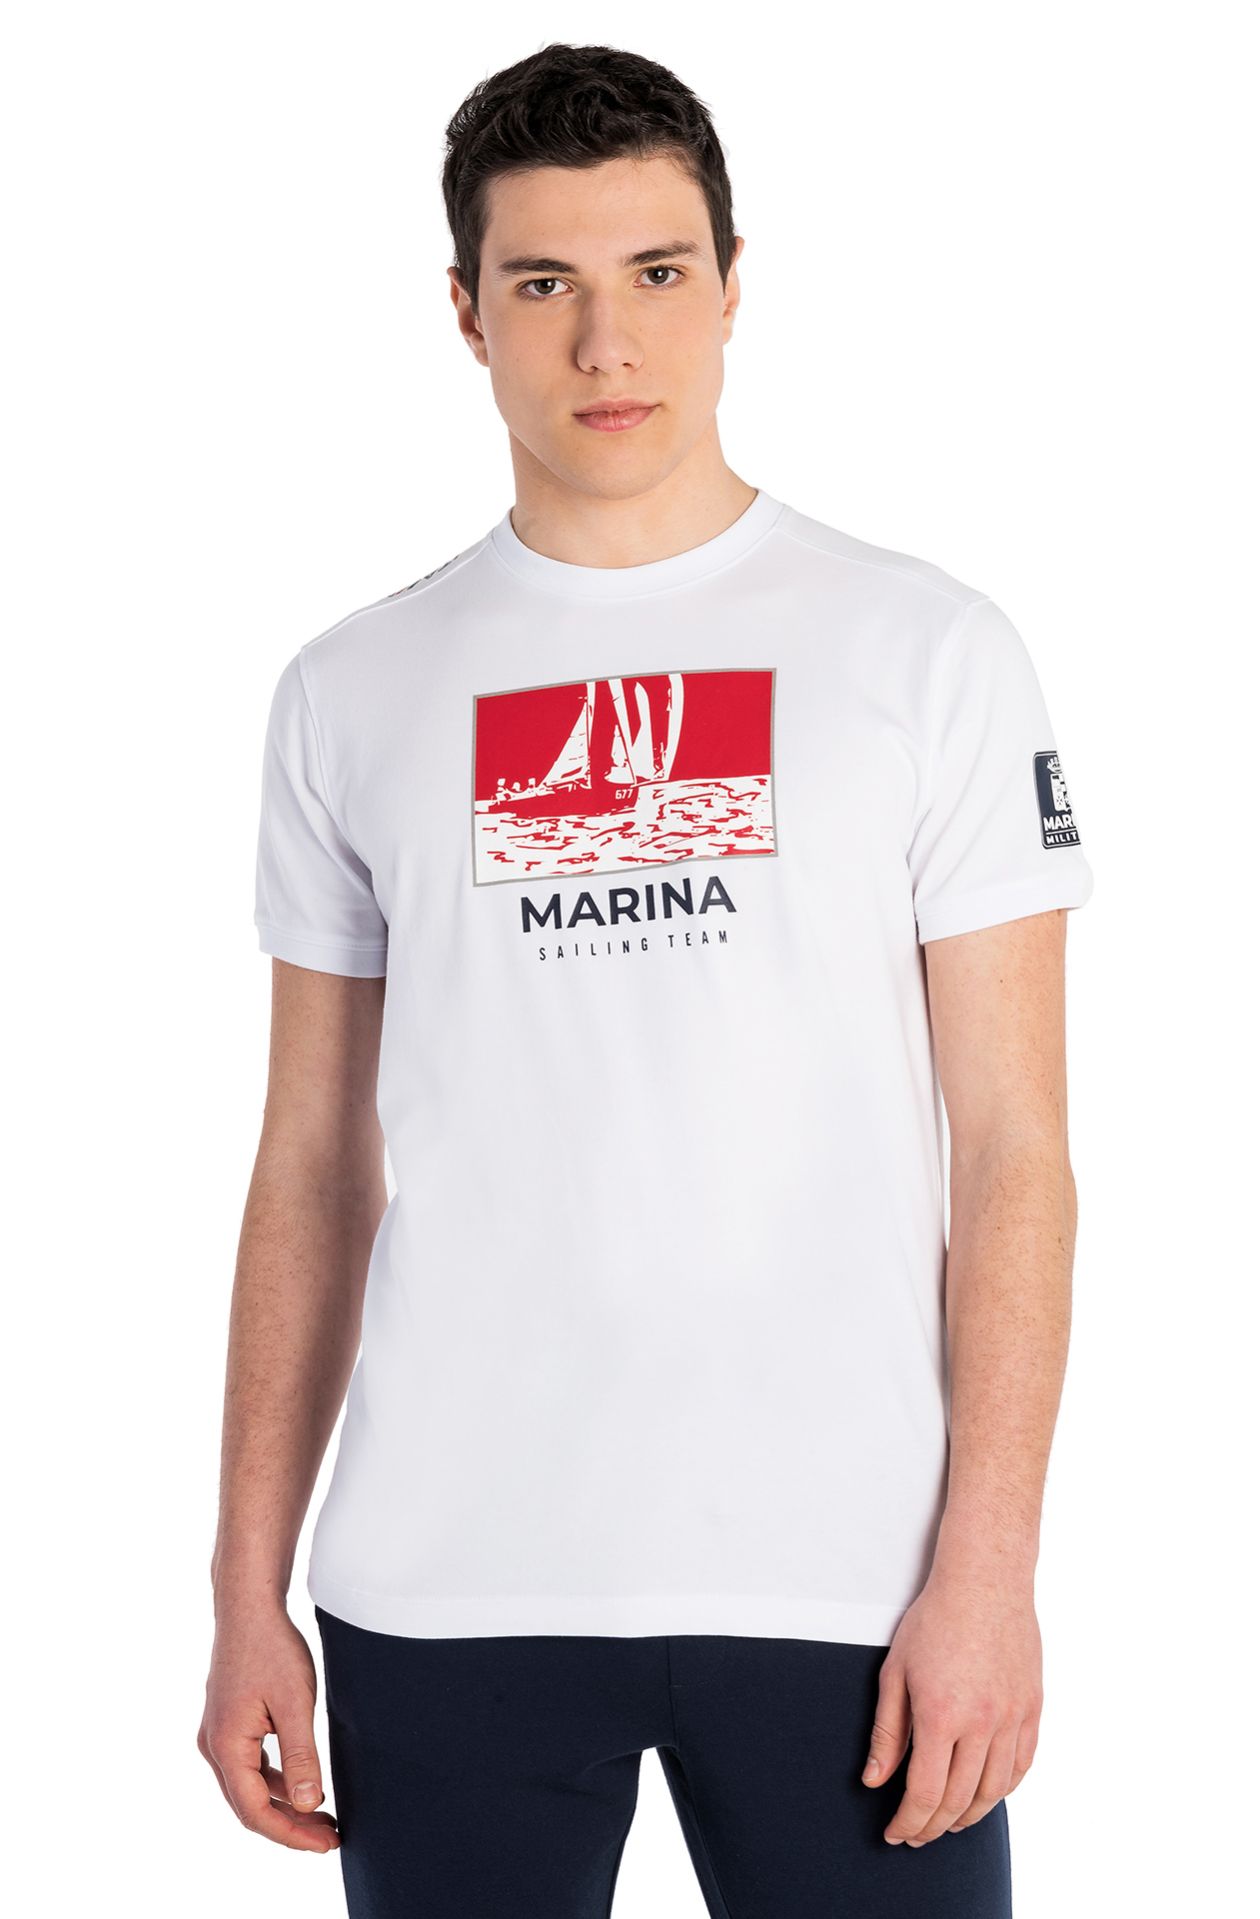 Sailing Team T-shirt